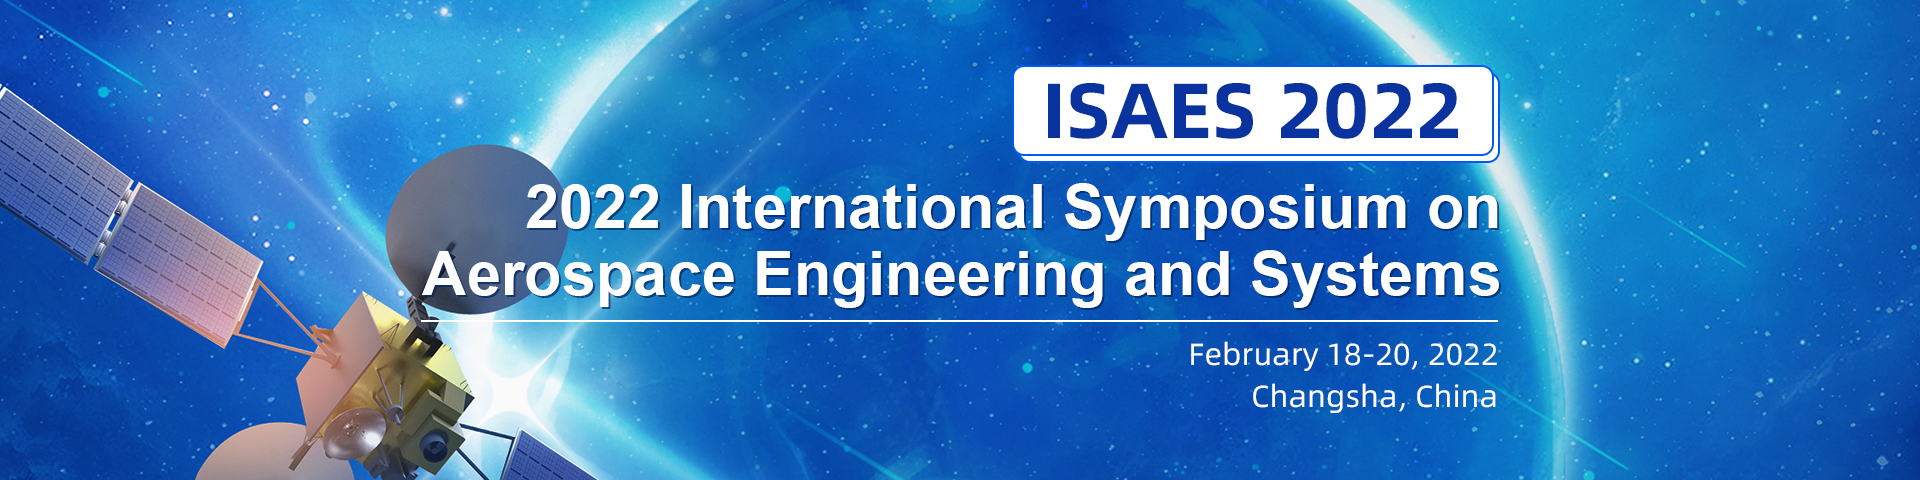 2022 International Symposium on Aerospace Engineering and Systems (ISAES 2022), Changsha, Hunan, China